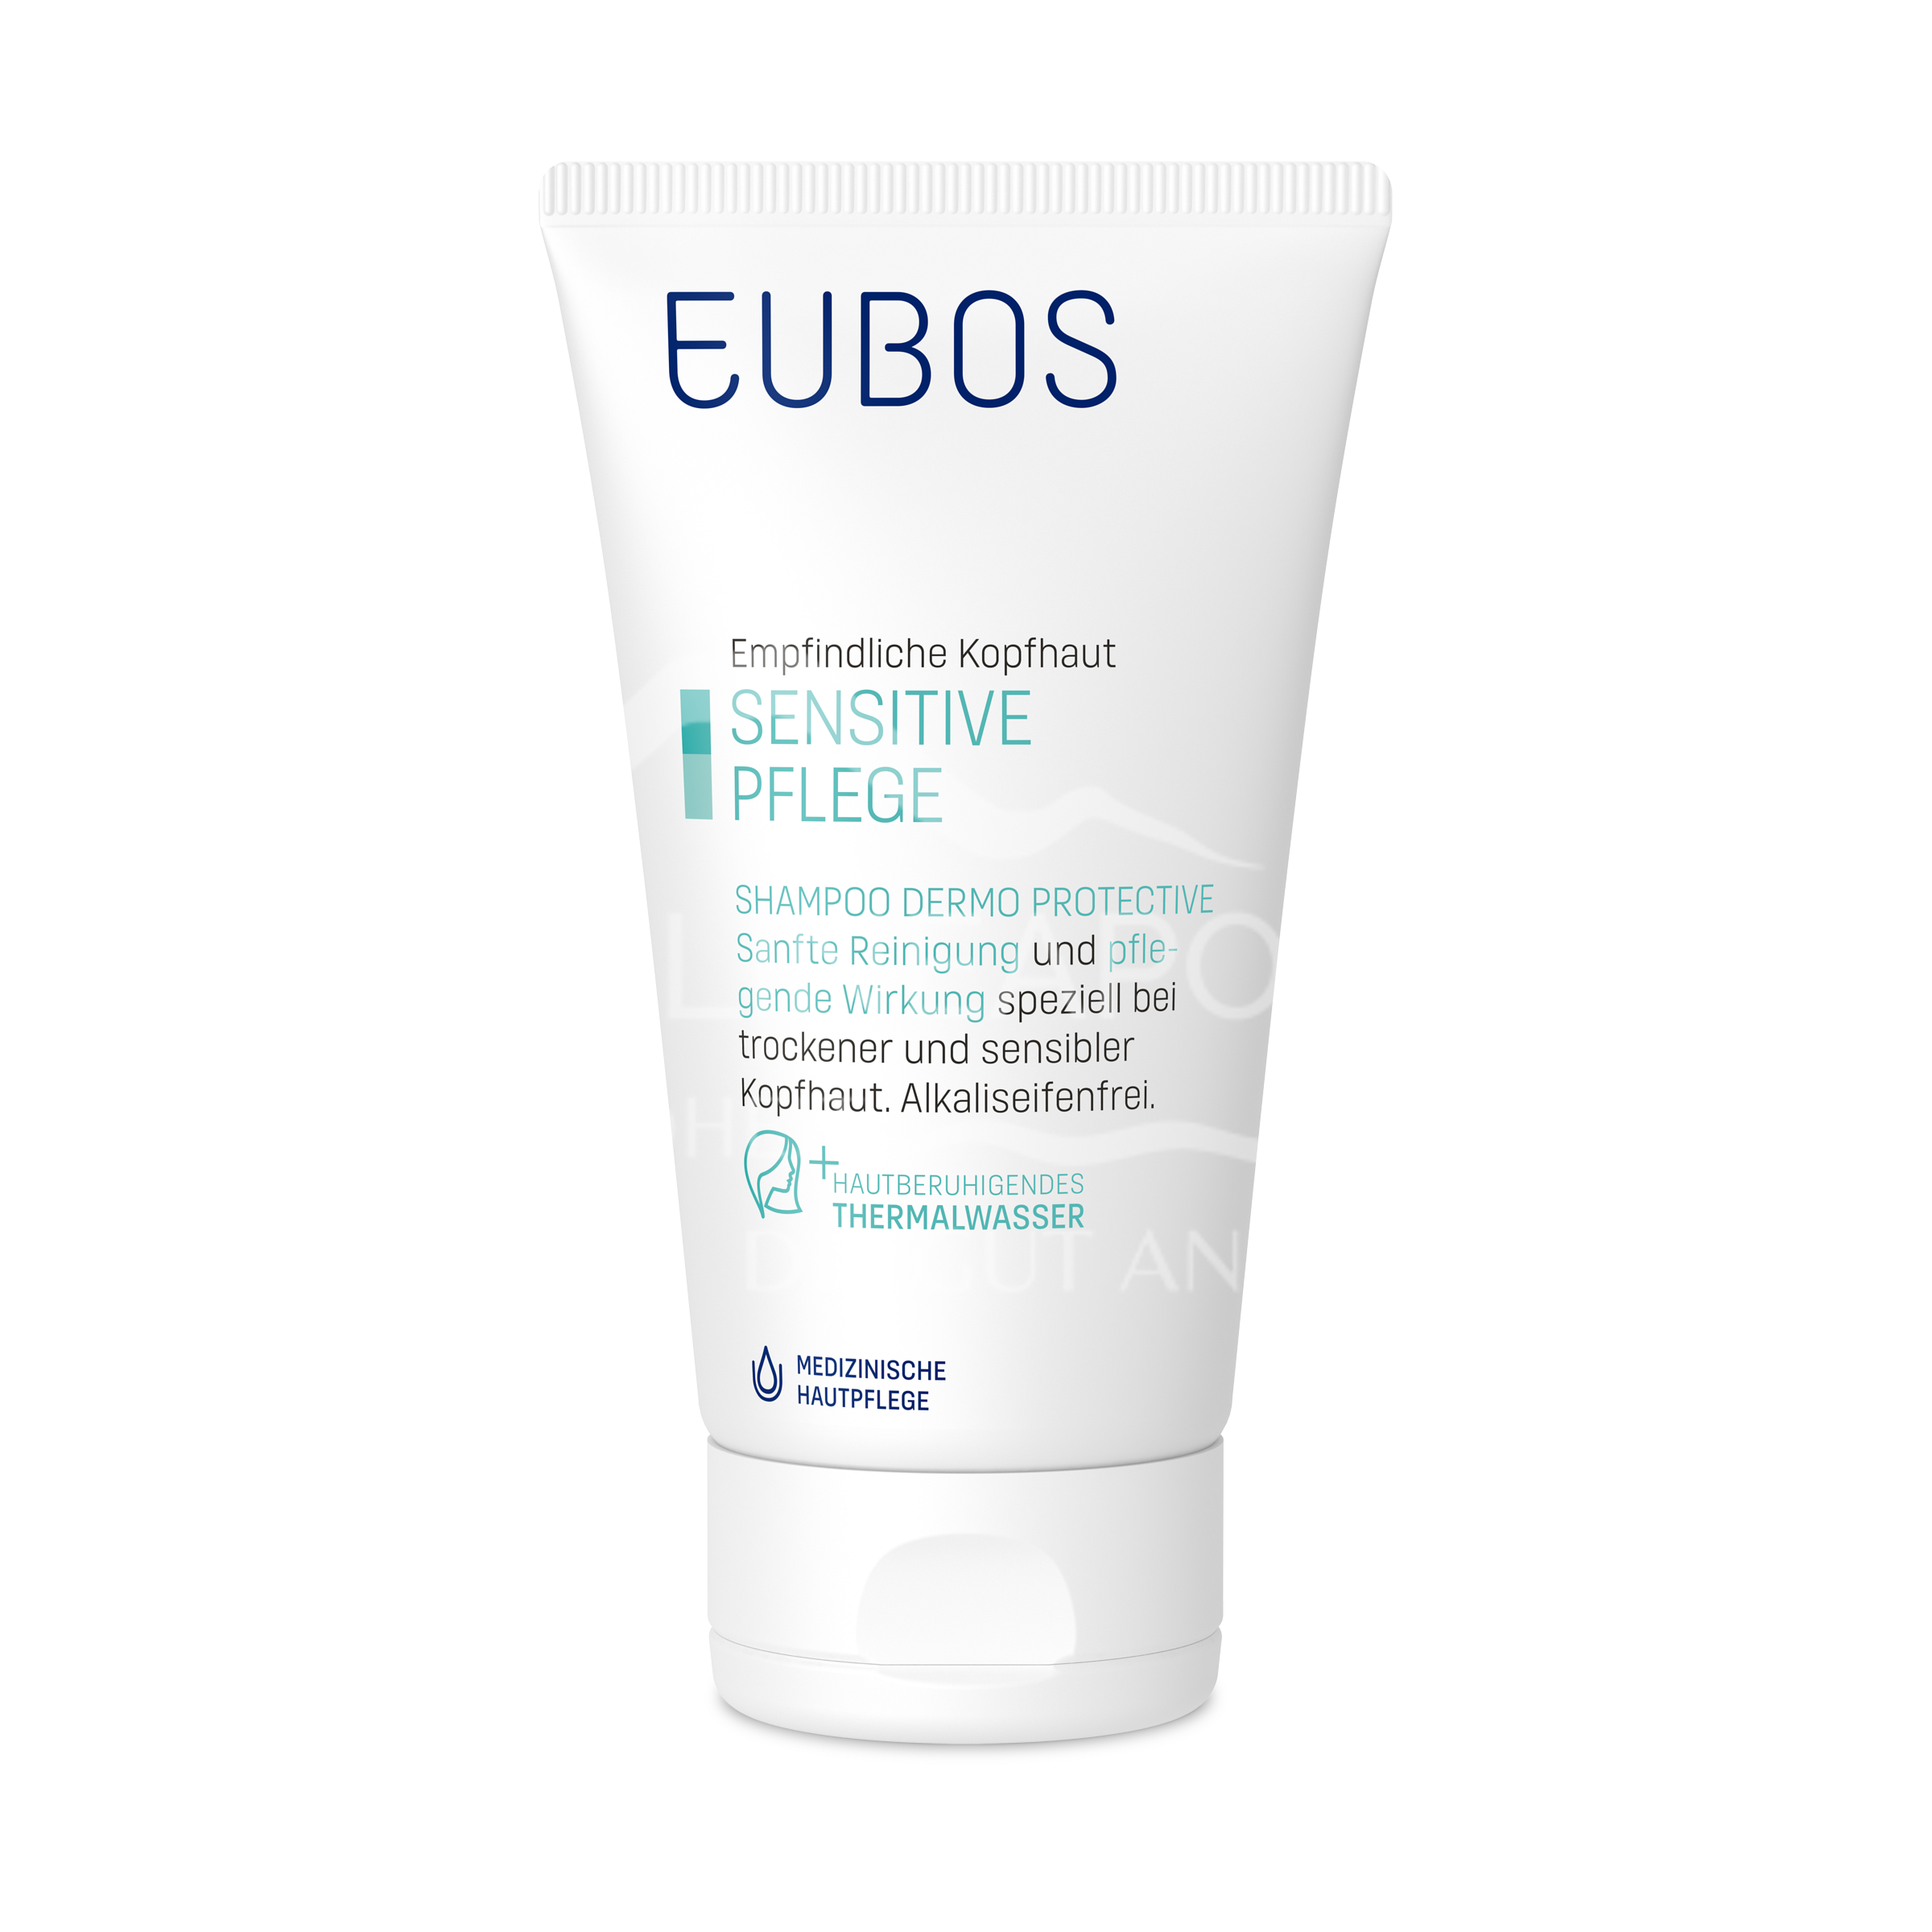 Eubos Sensitive Pflege Shampoo Dermo Protective